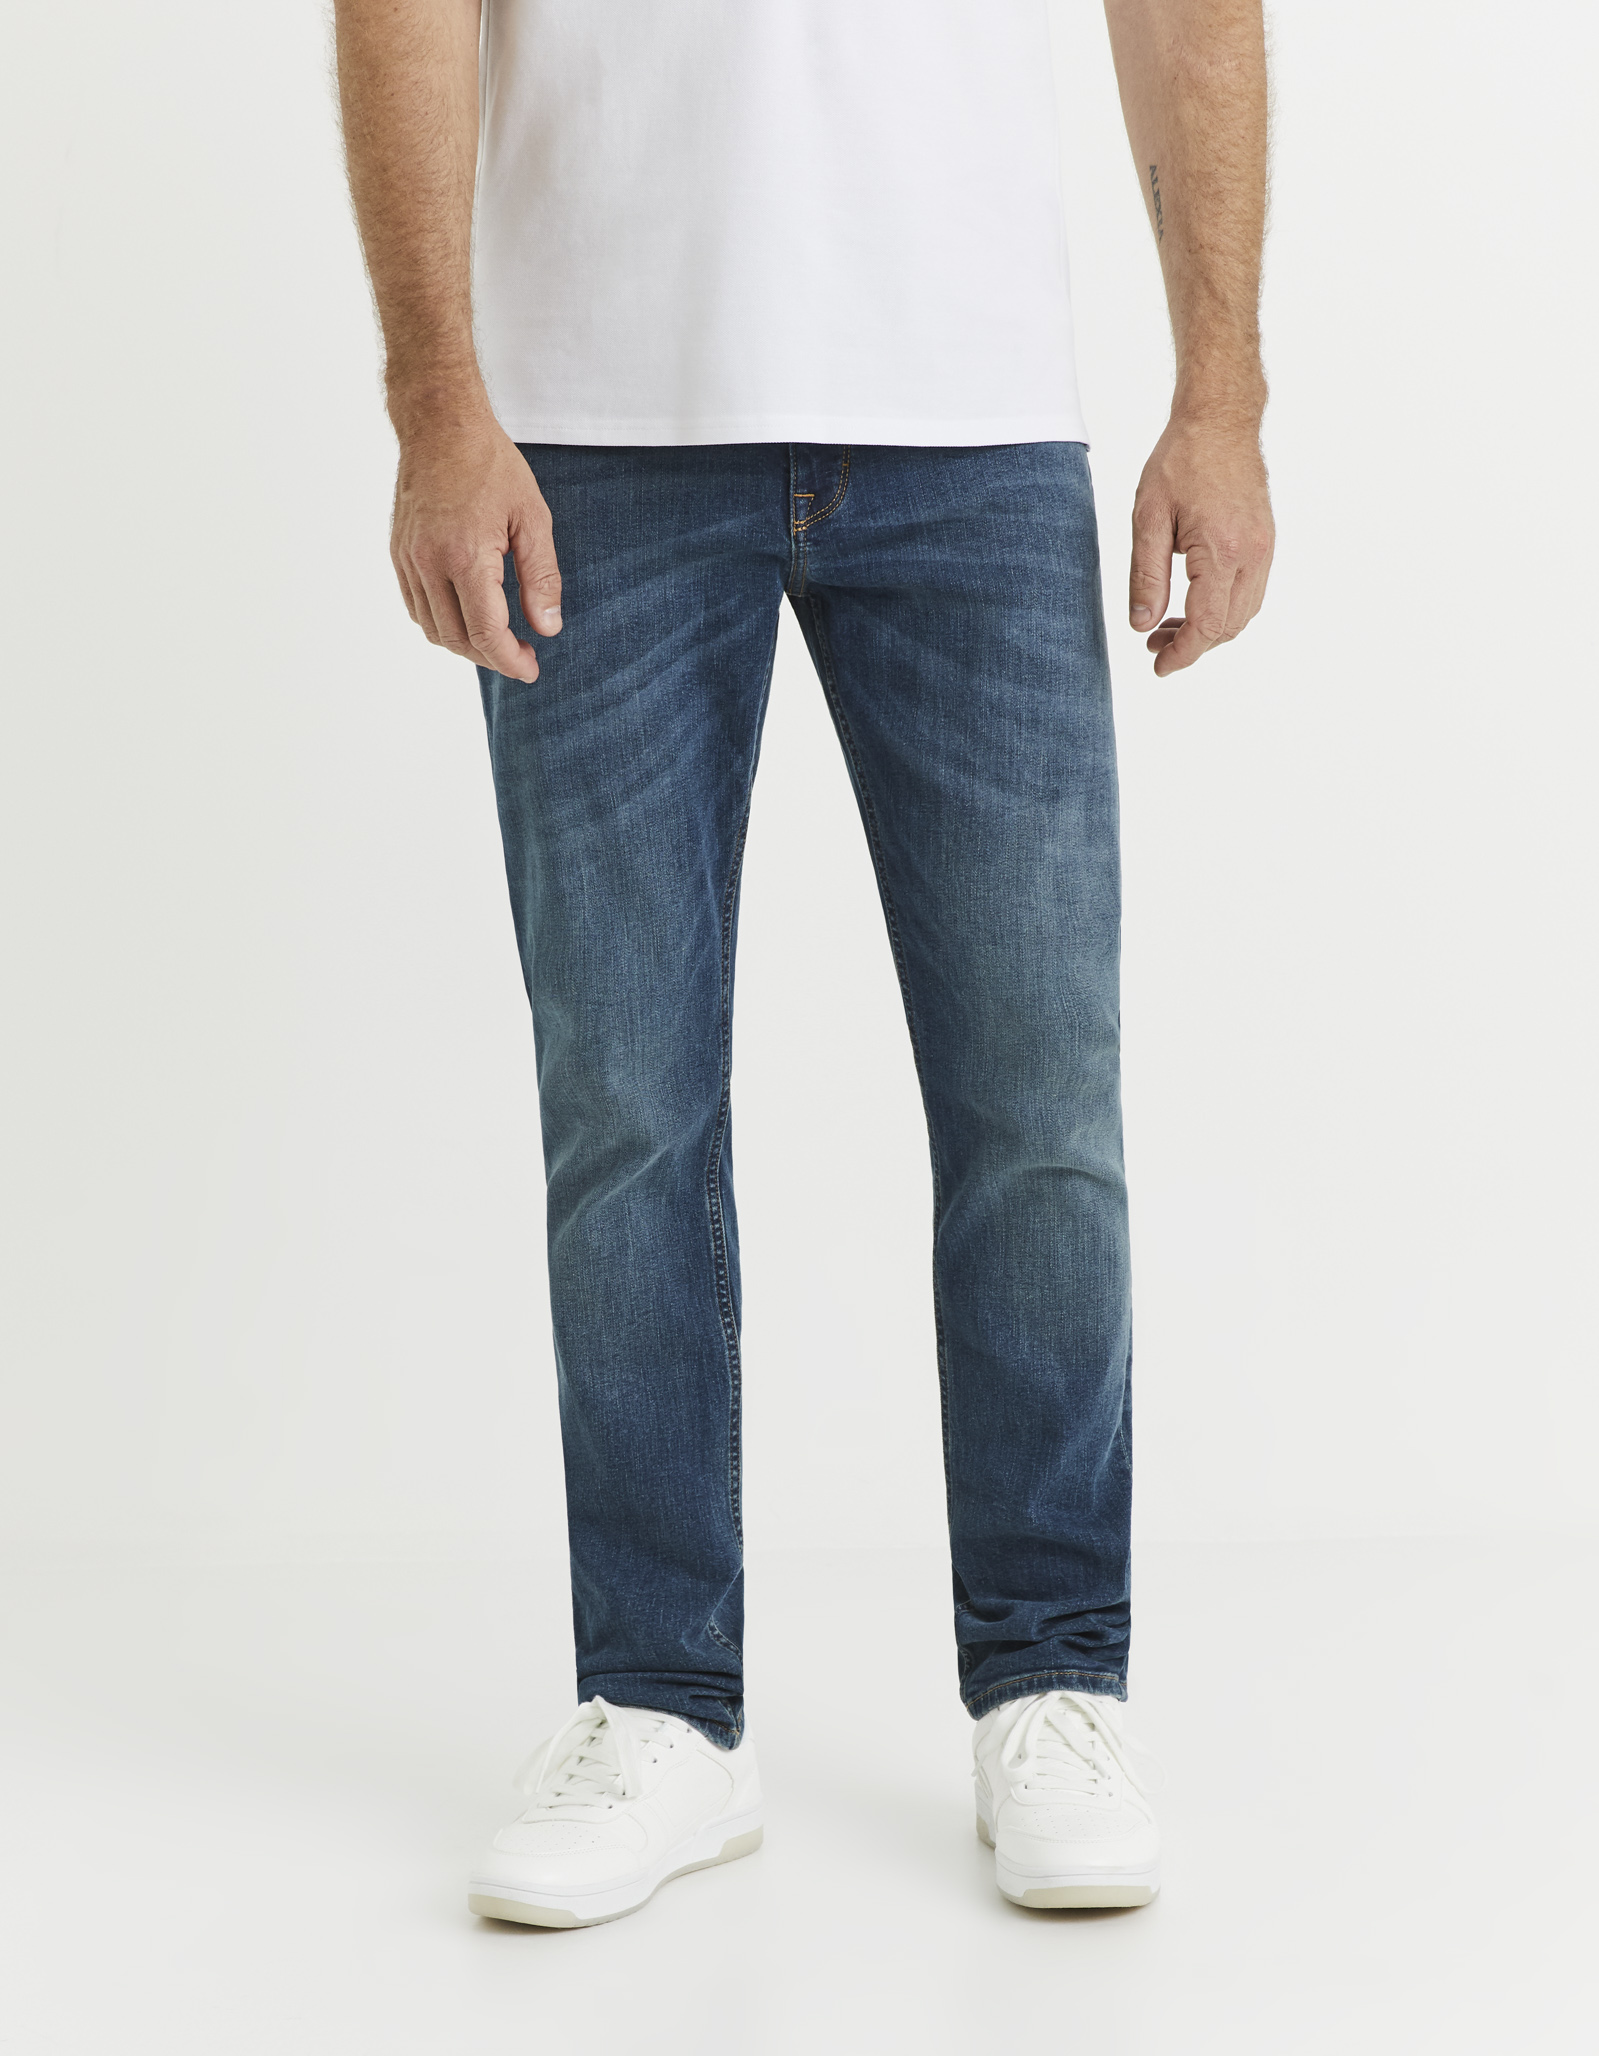 Celio Jeans Poslage25 - Men